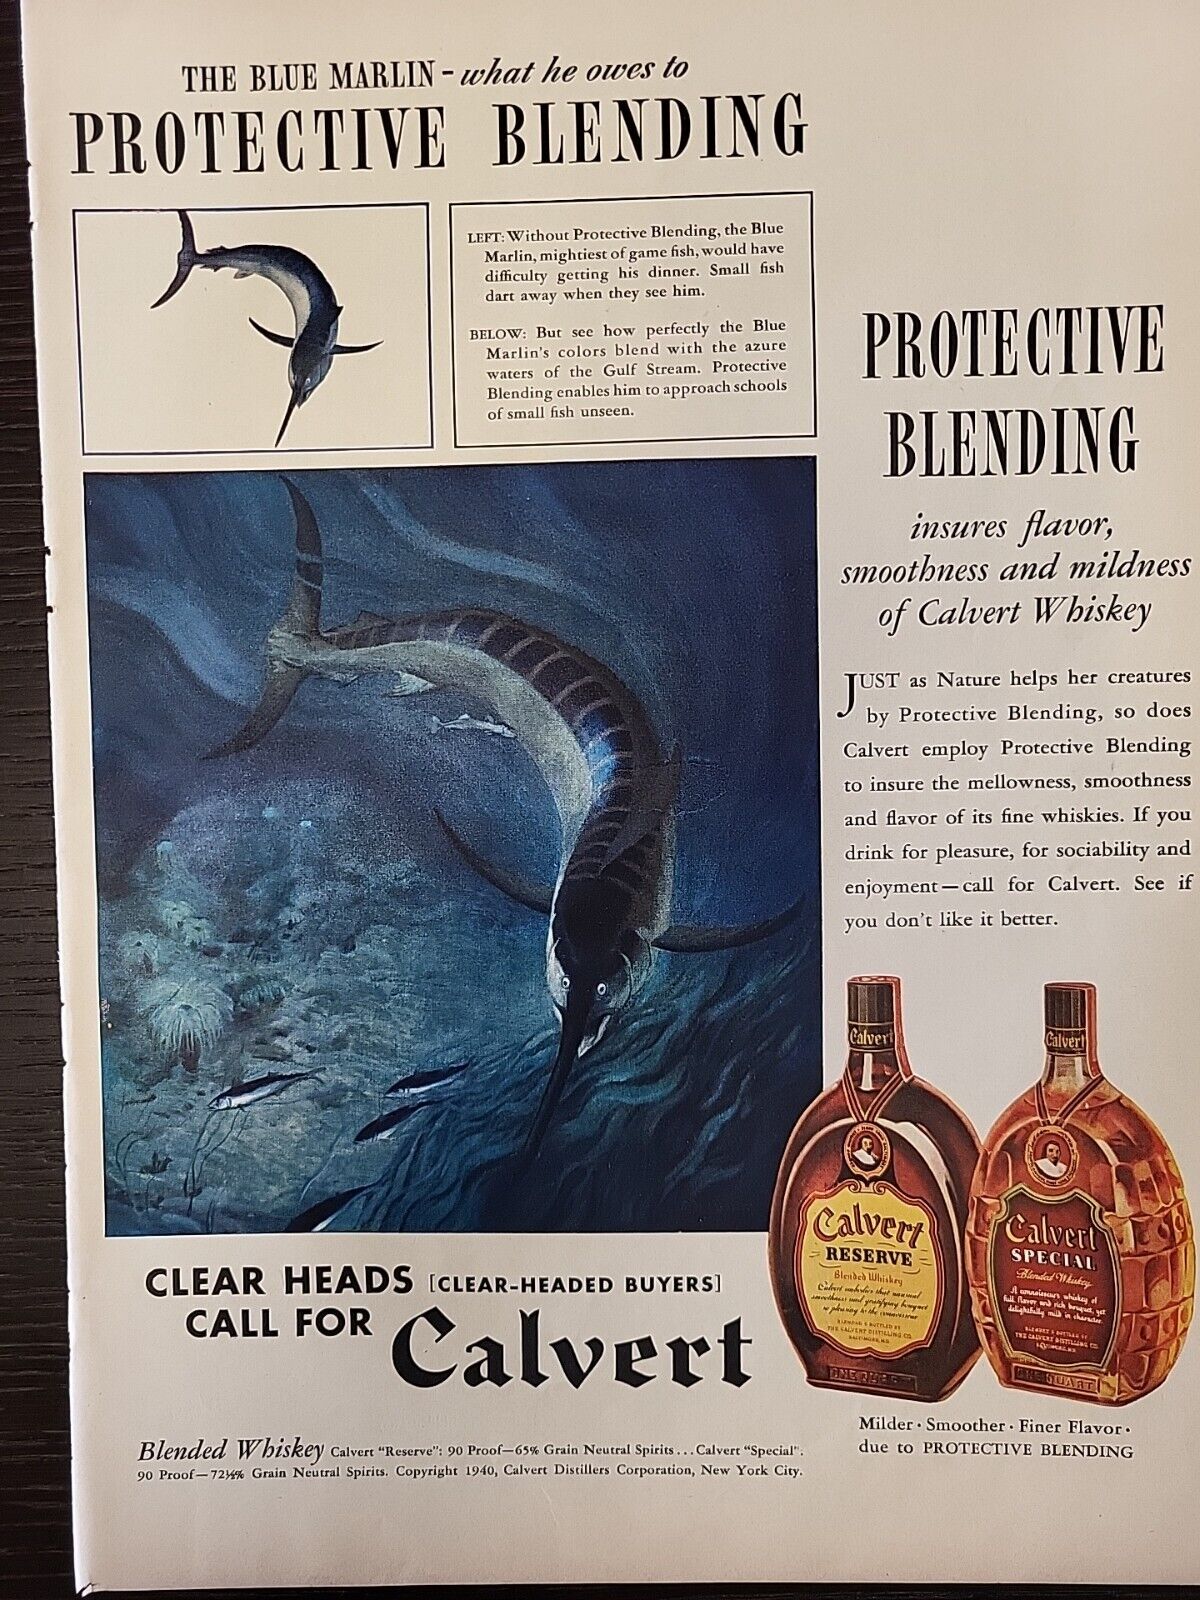 1940 Print Advertising Calvert Whiskey Blue Marlin protective blending LIFE L42A